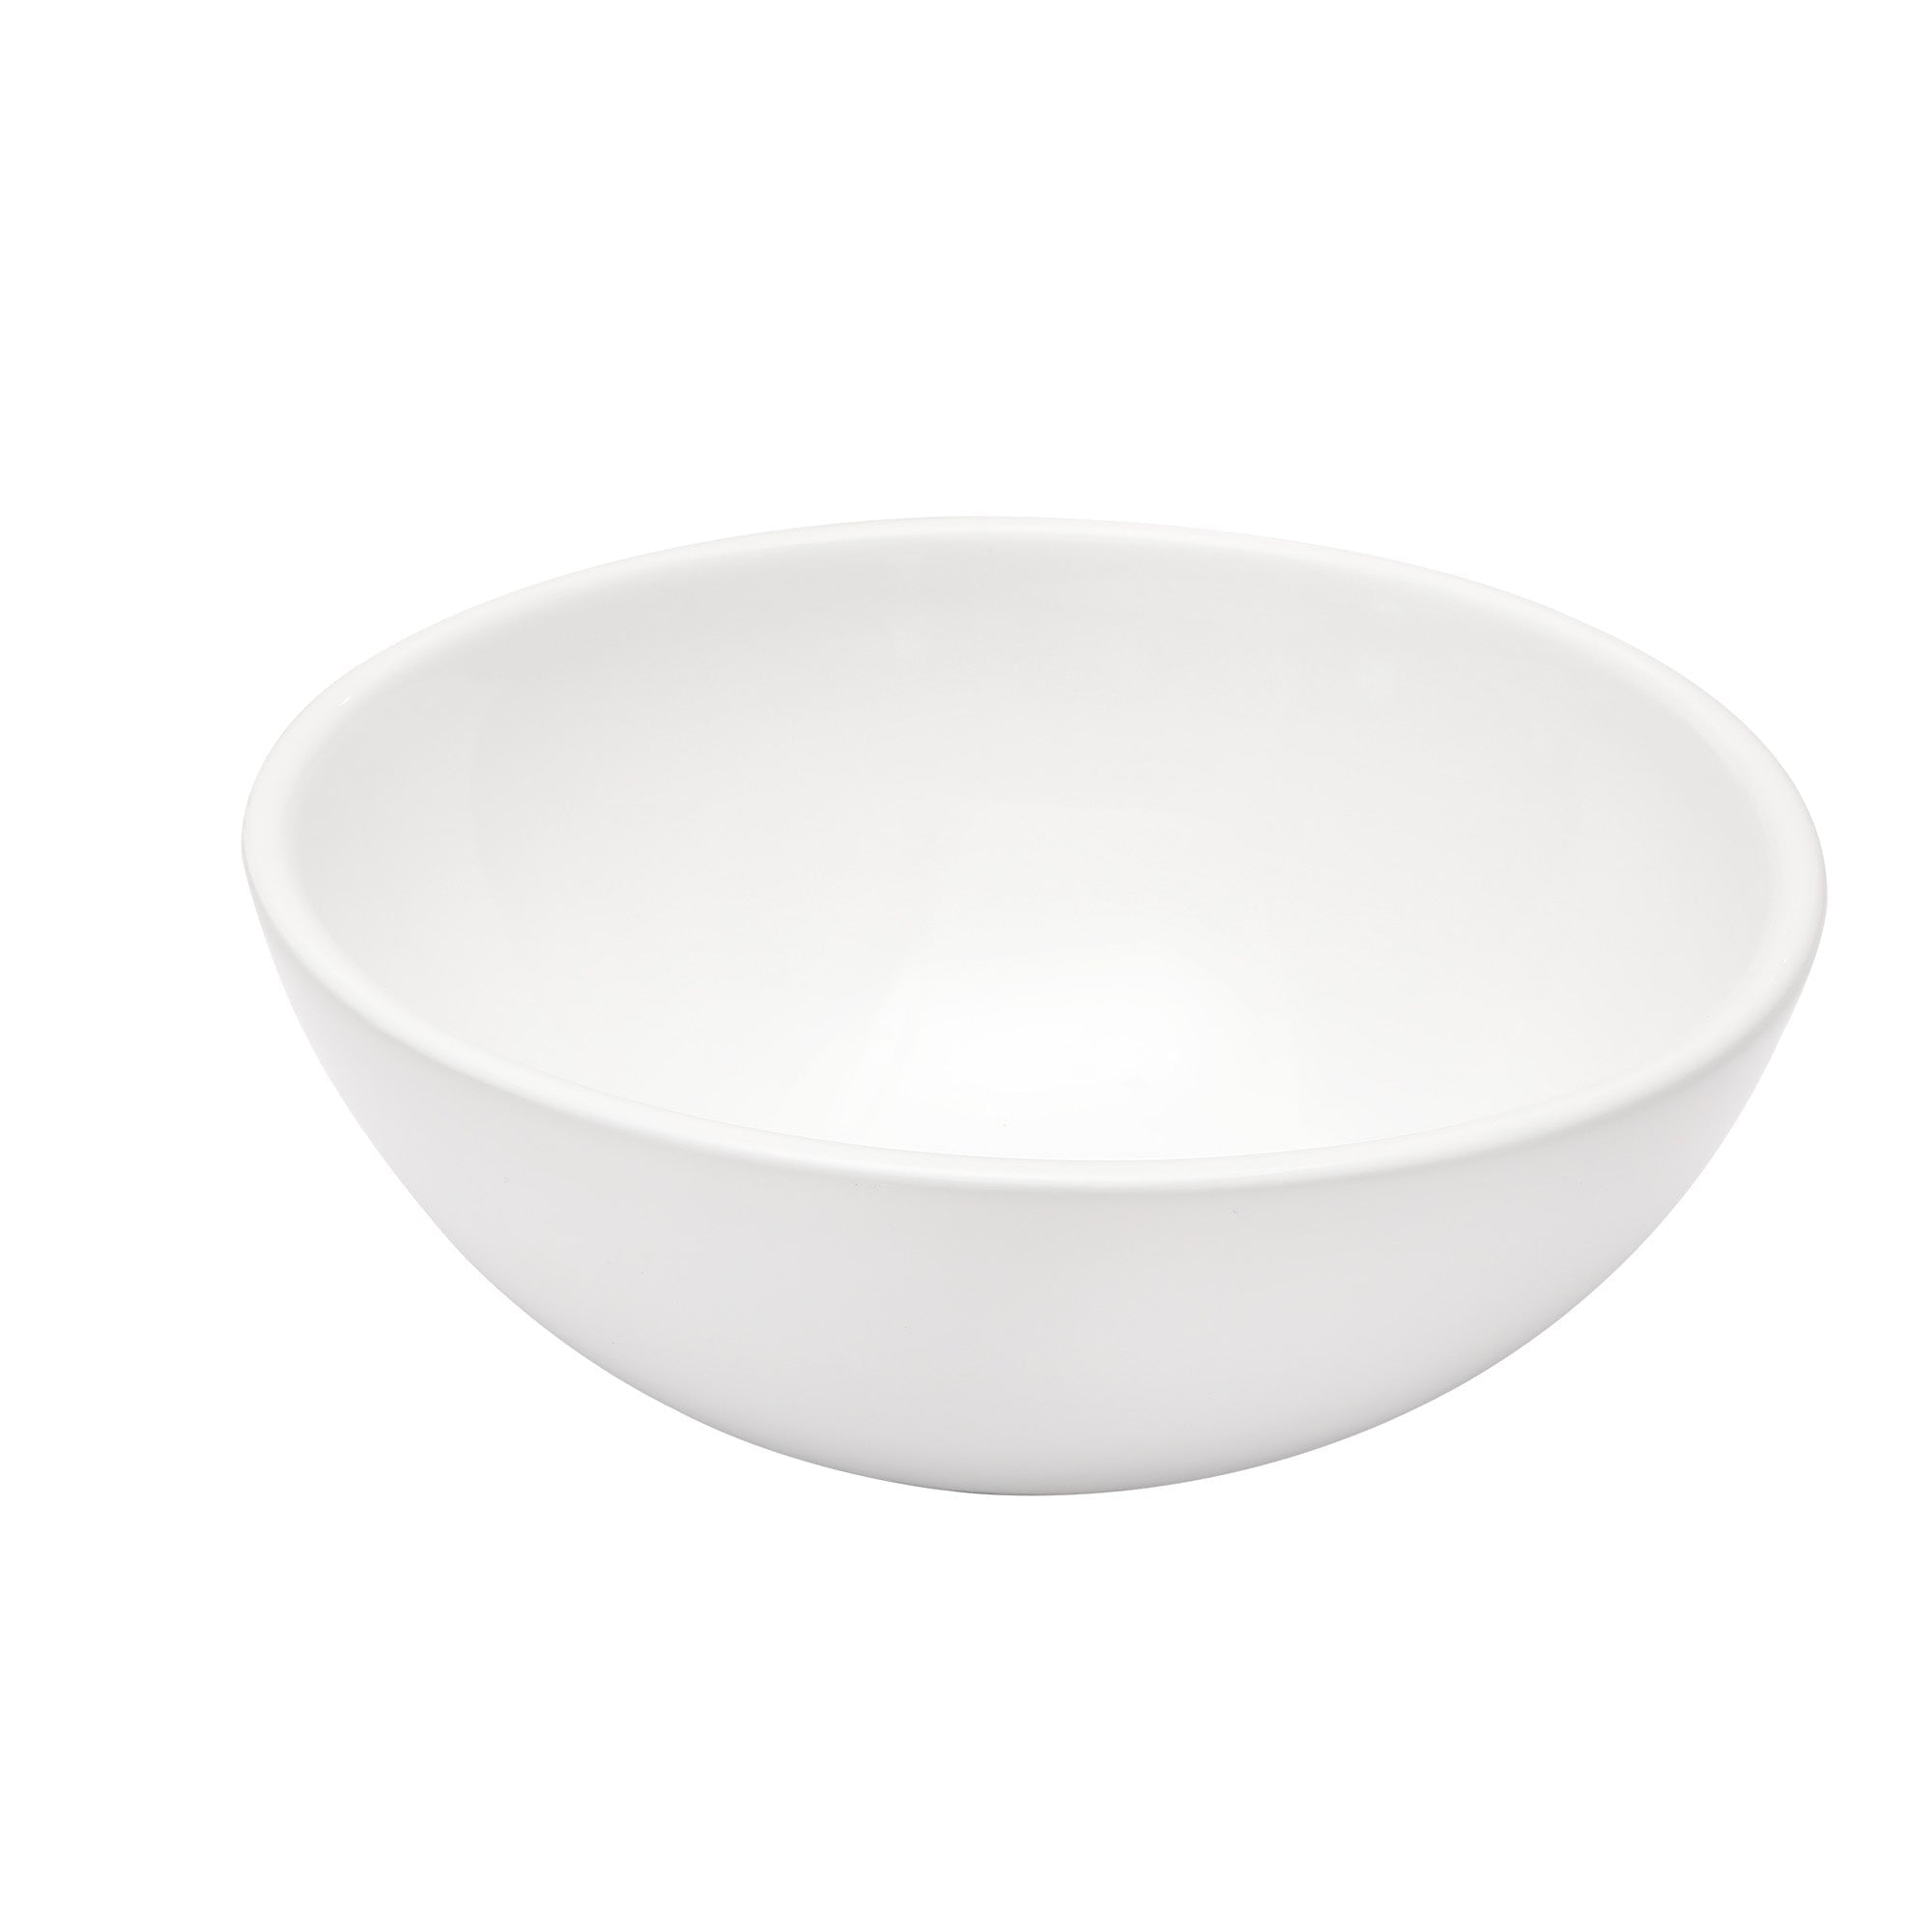 13in W x 13in D Washroom Sink Design Bathroom Vessel Sink Round Bowl White Ceramic from Lordear